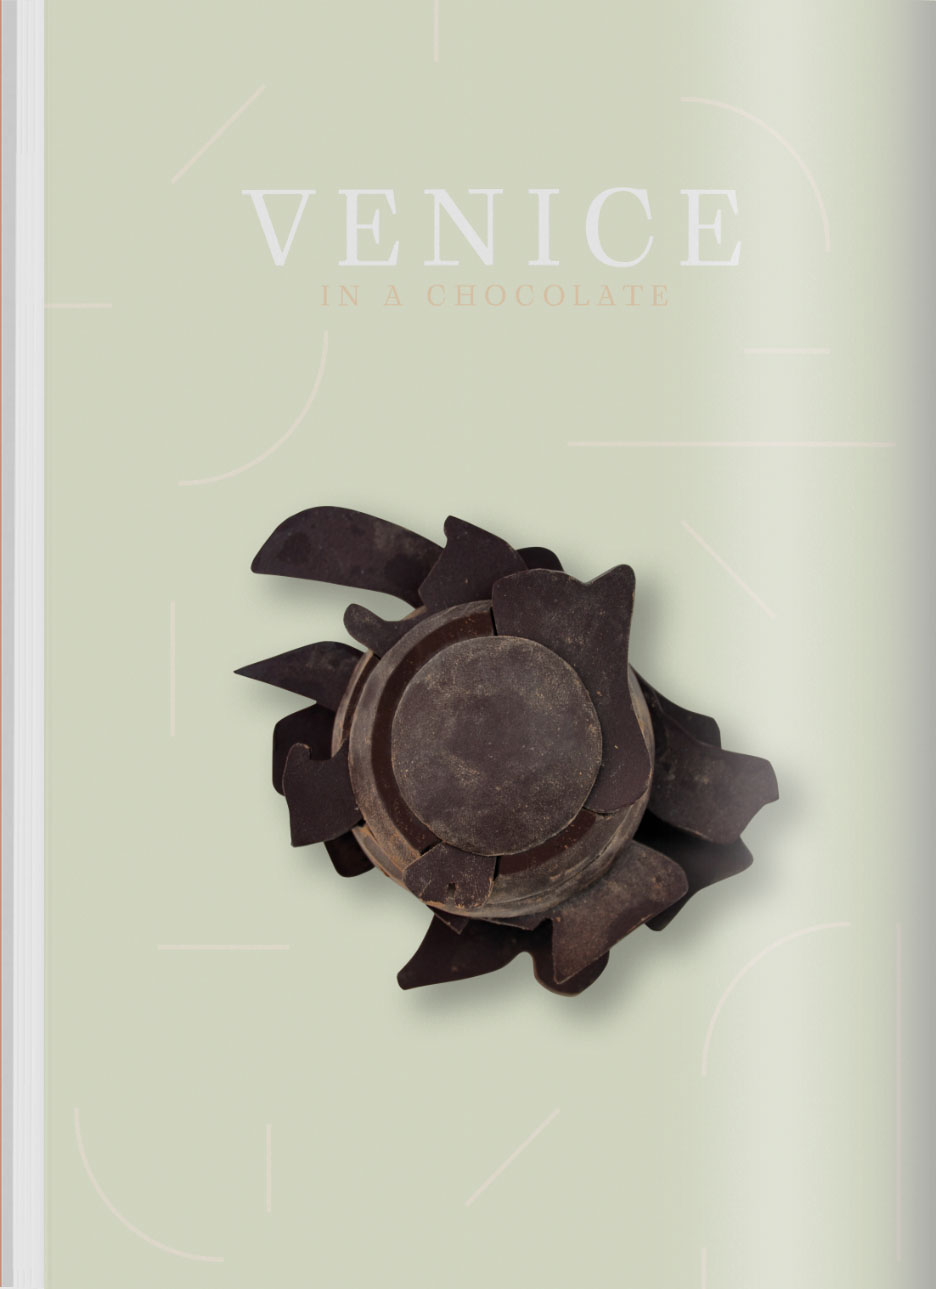 Venice written above black chocolate